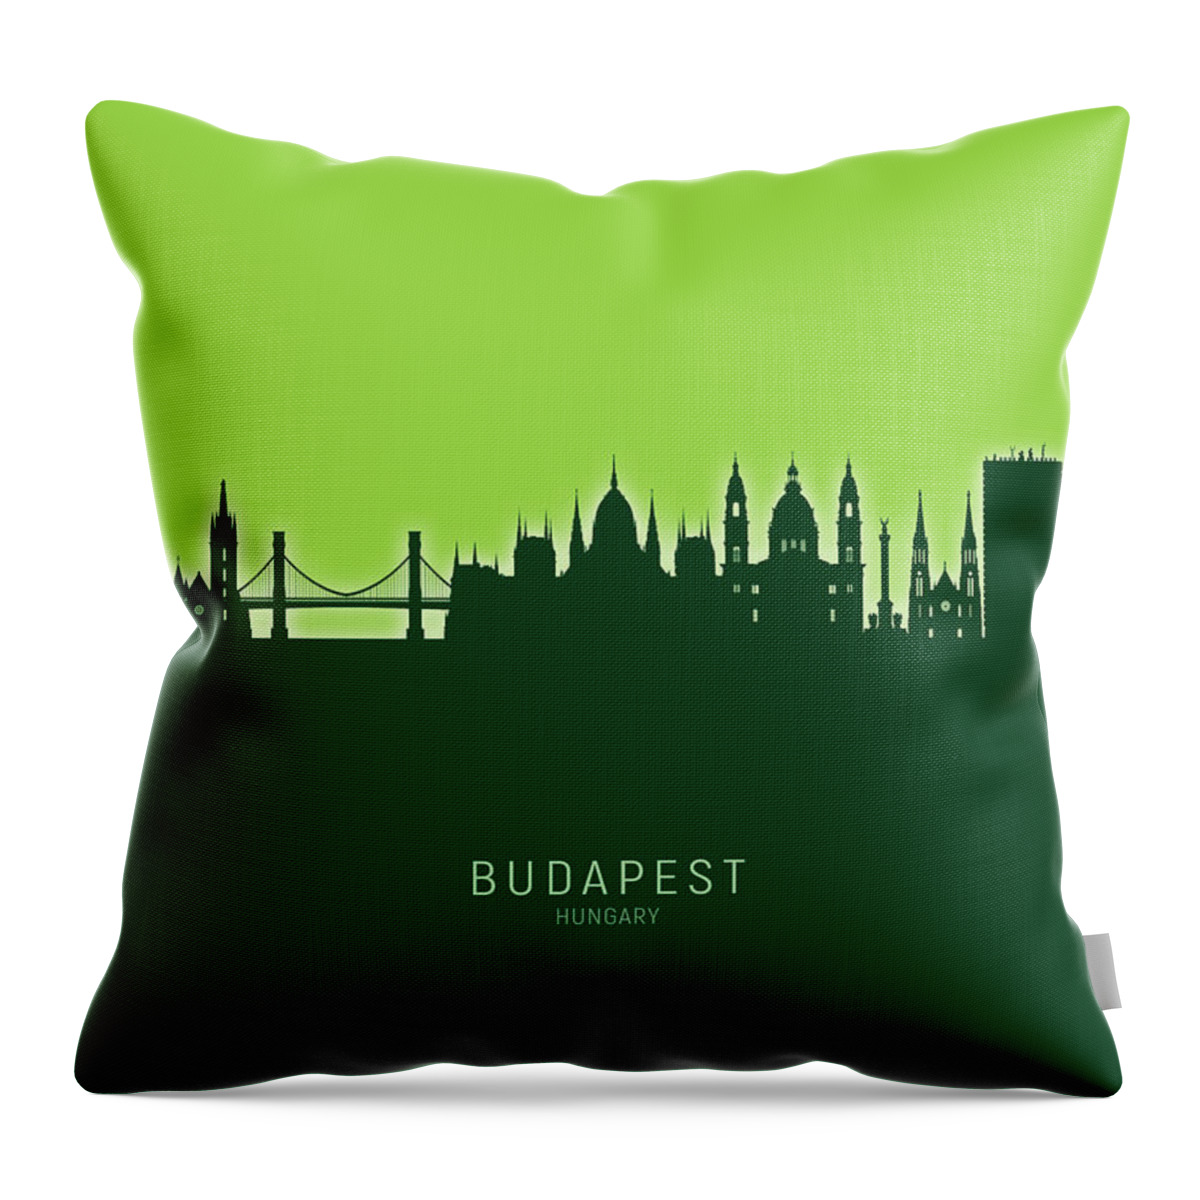 Budapest Throw Pillow featuring the digital art Budapest Hungary Skyline #30 by Michael Tompsett